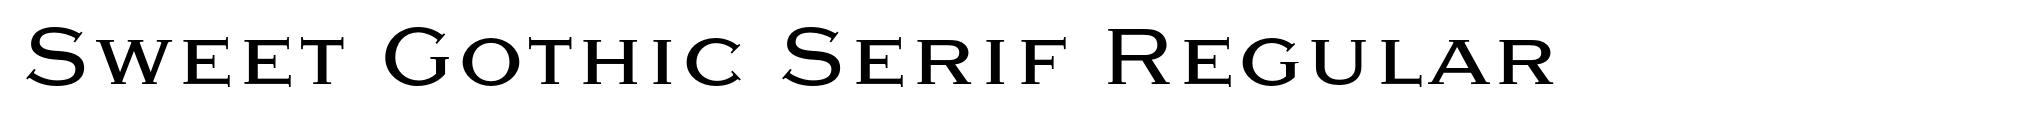 Sweet Gothic Serif Regular image